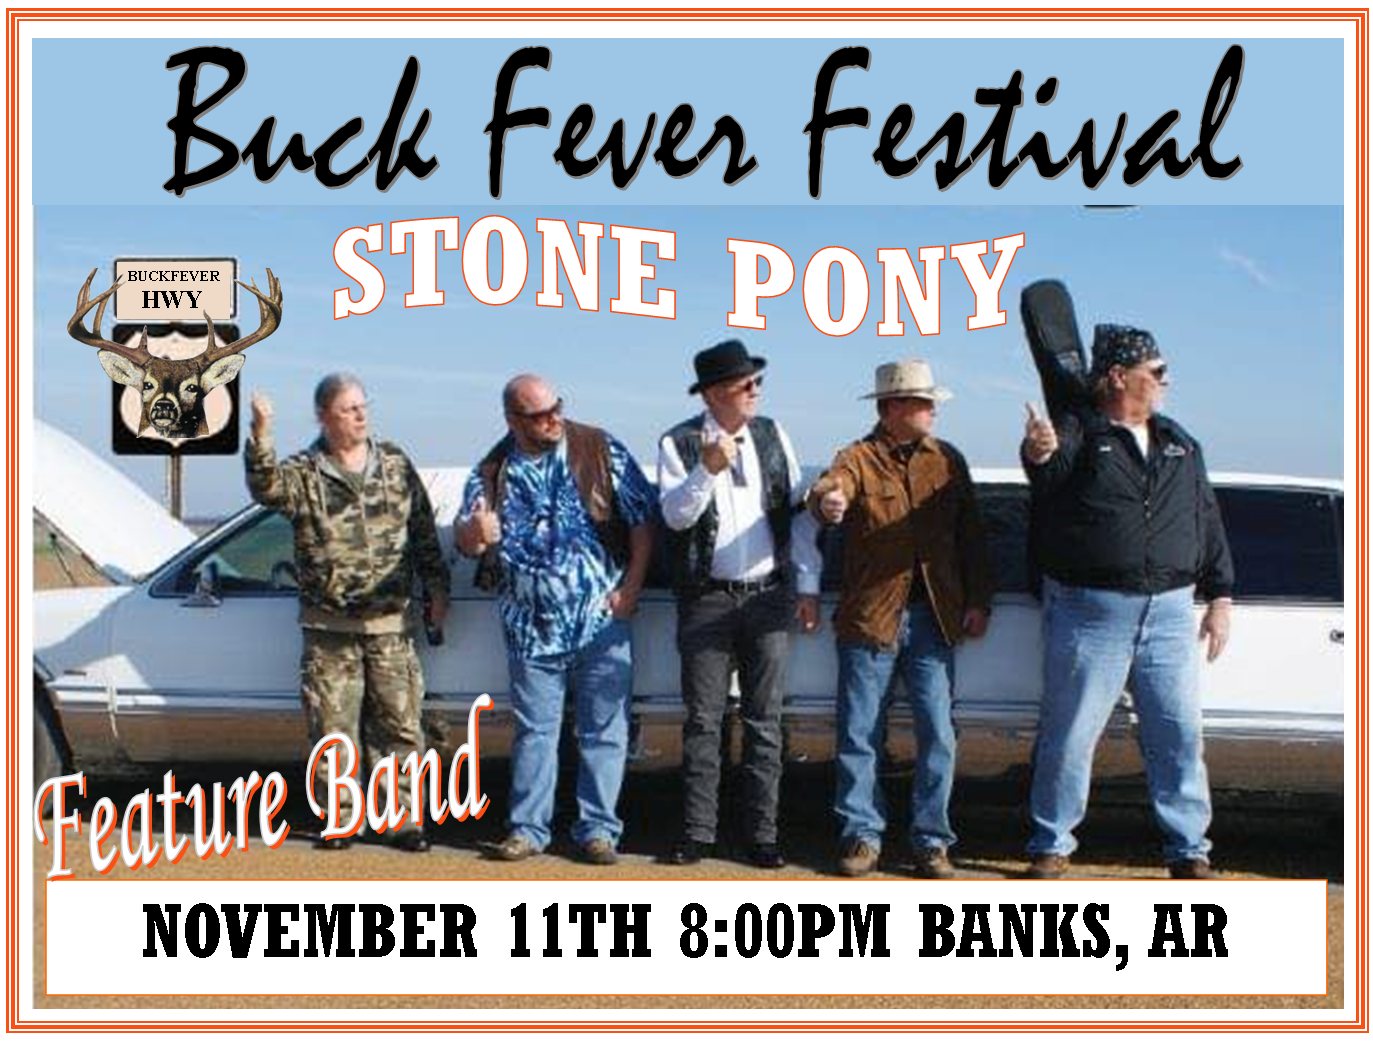 Stone Pony to perform at Buck Fever November 11